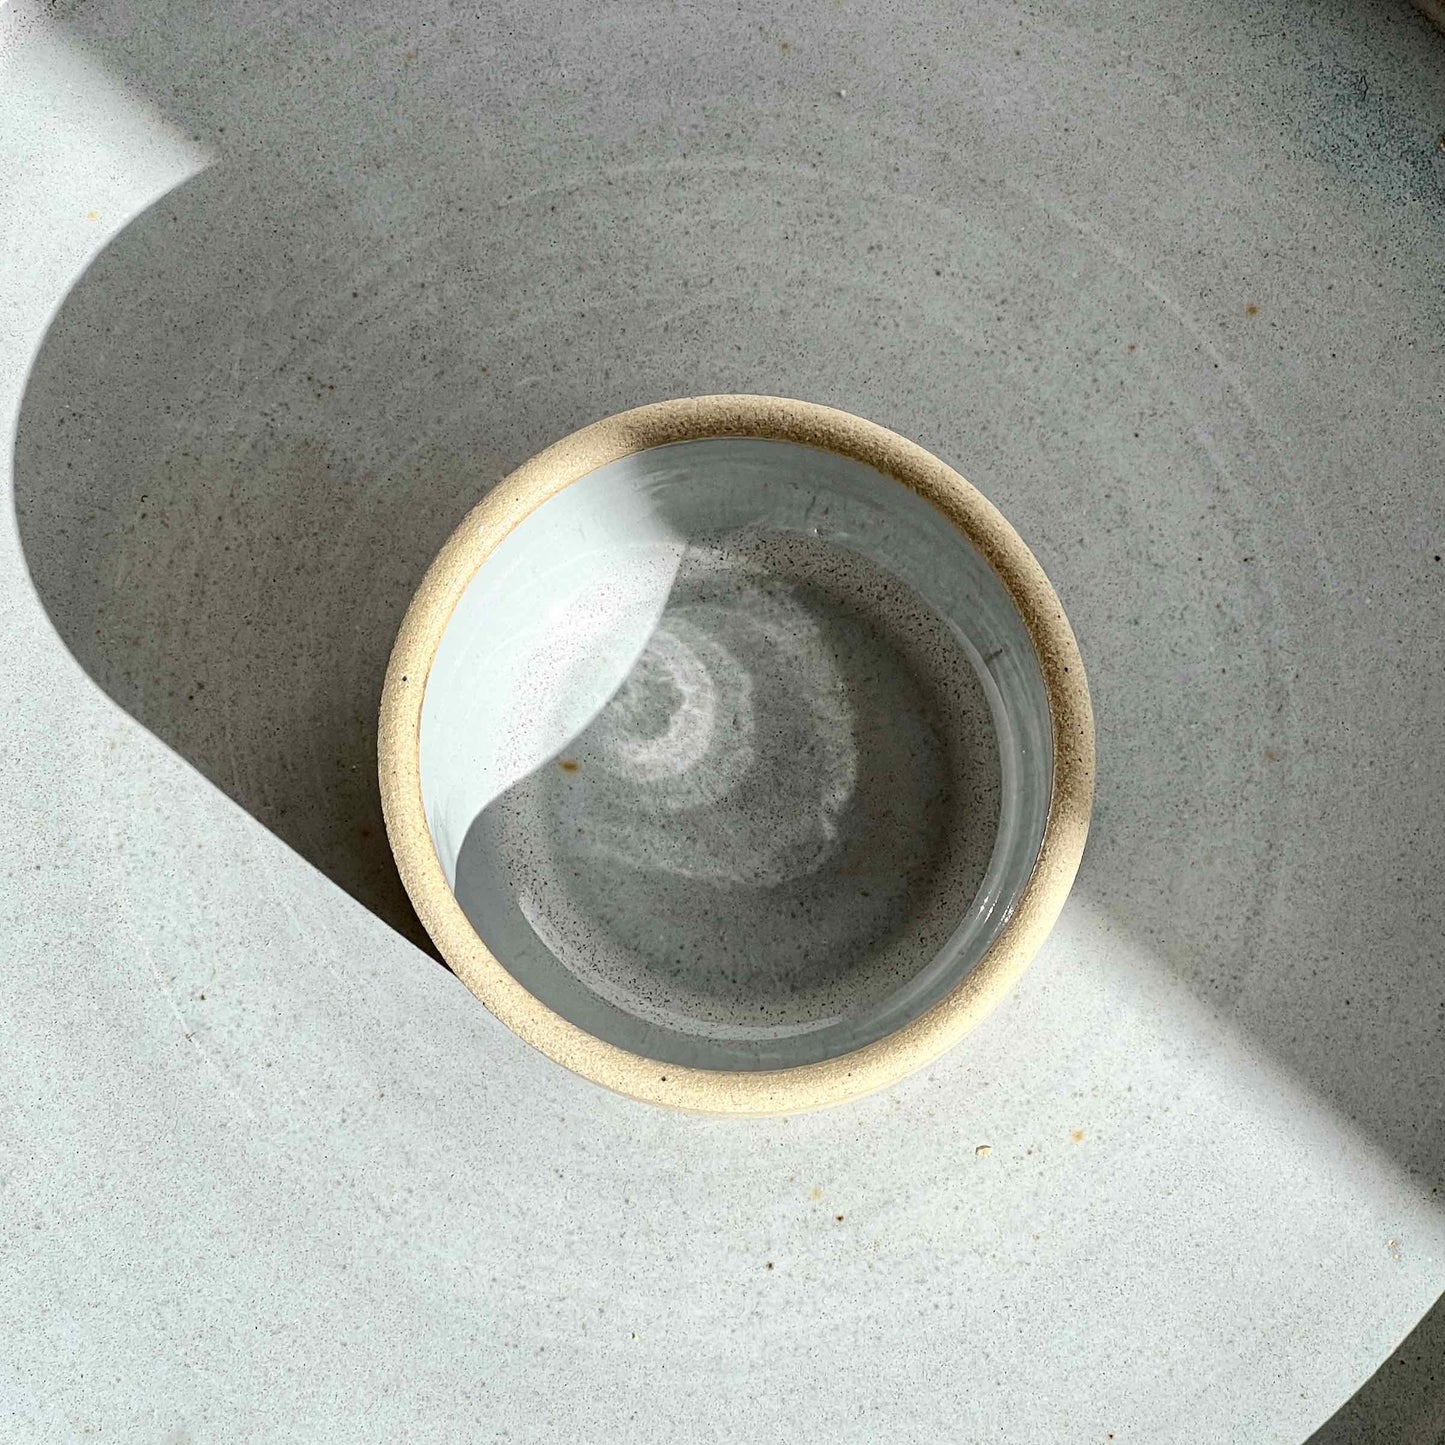 Small ceramic jar